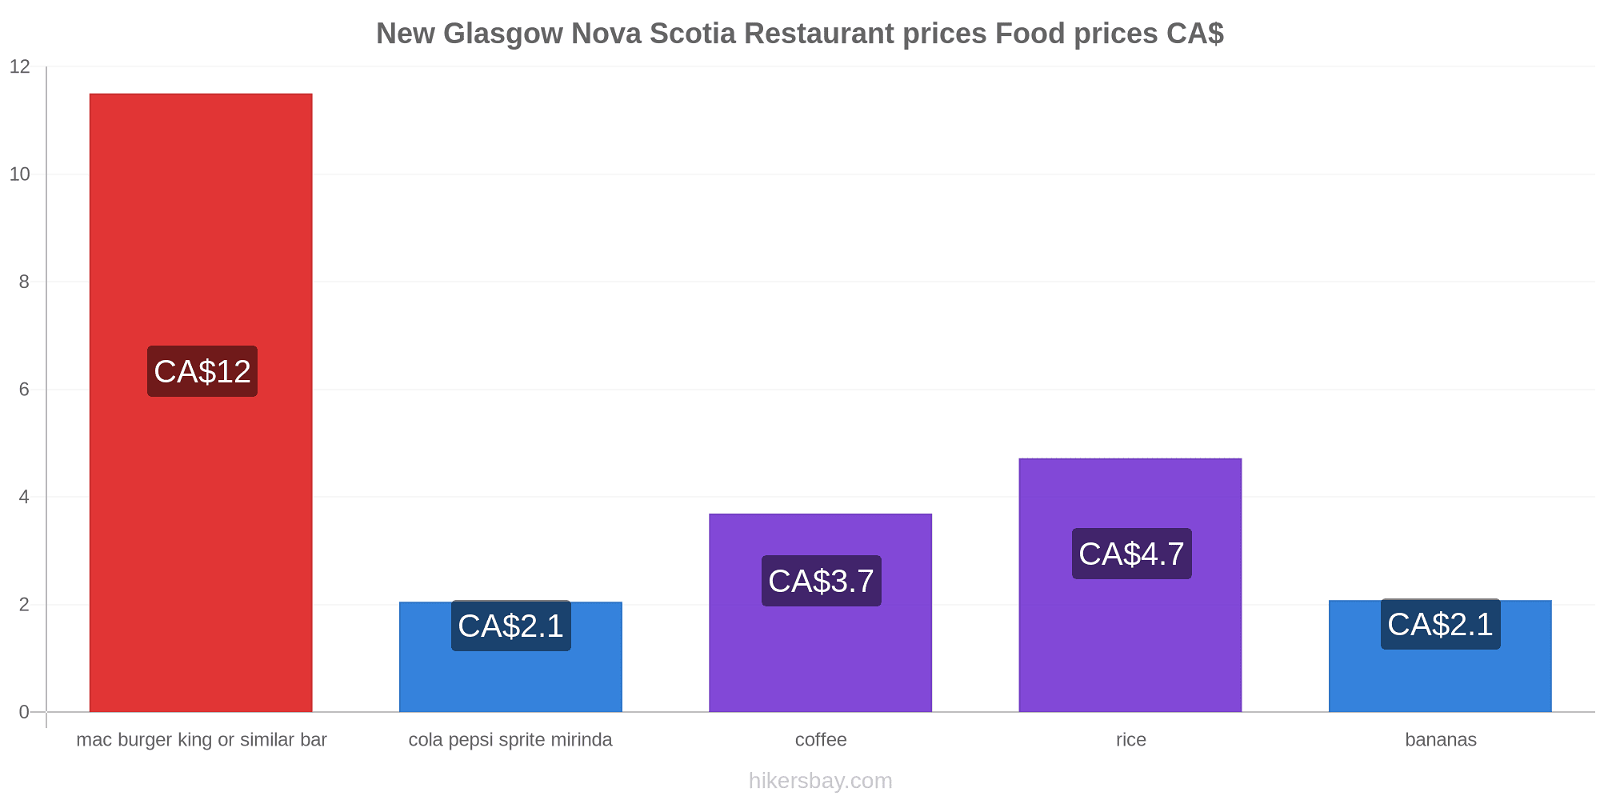 New Glasgow Nova Scotia price changes hikersbay.com